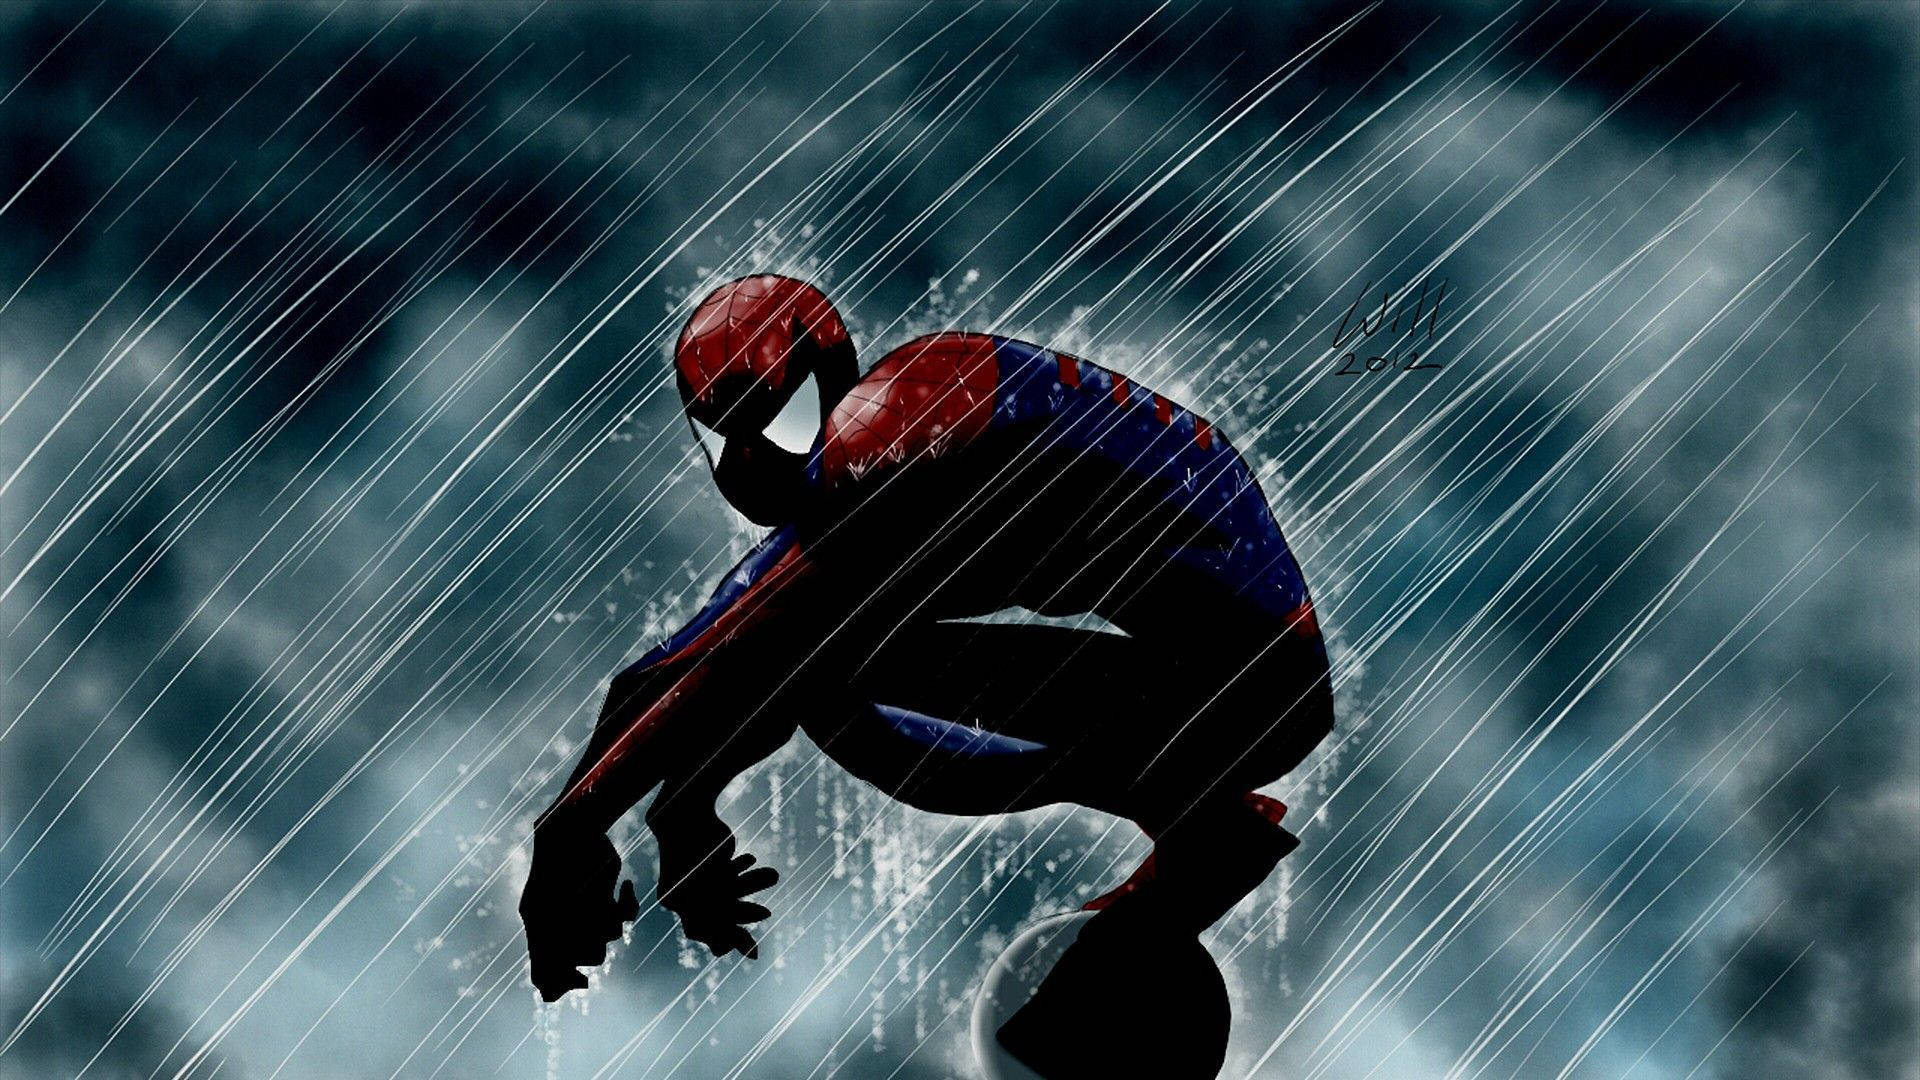 Spiderman in the rain. Wallpaper